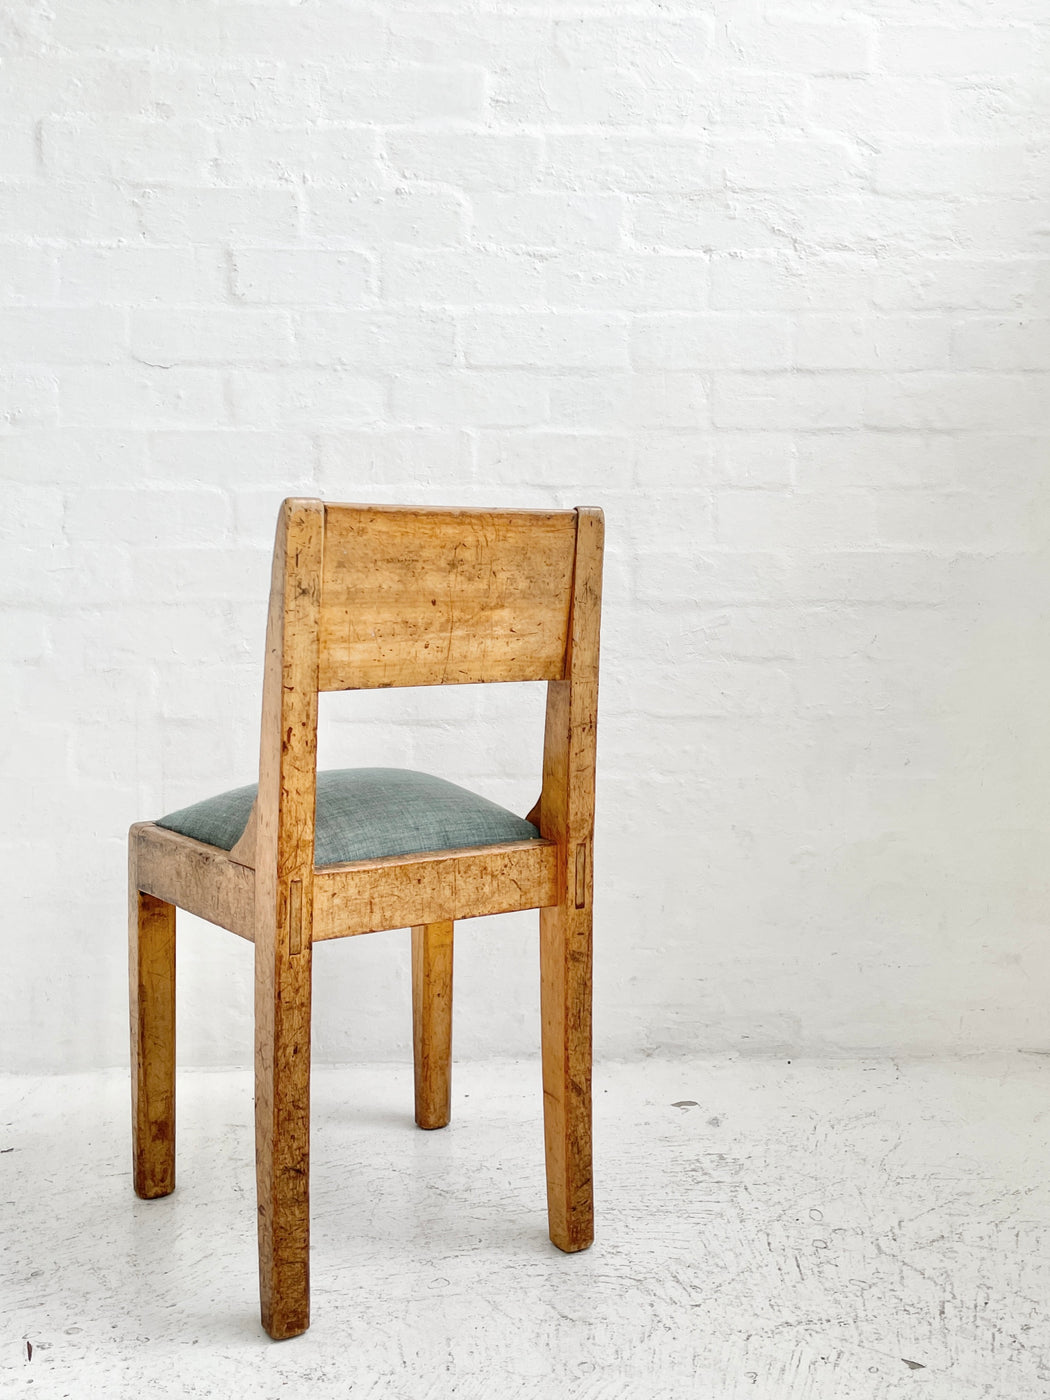 Australian Early-Modern Chair